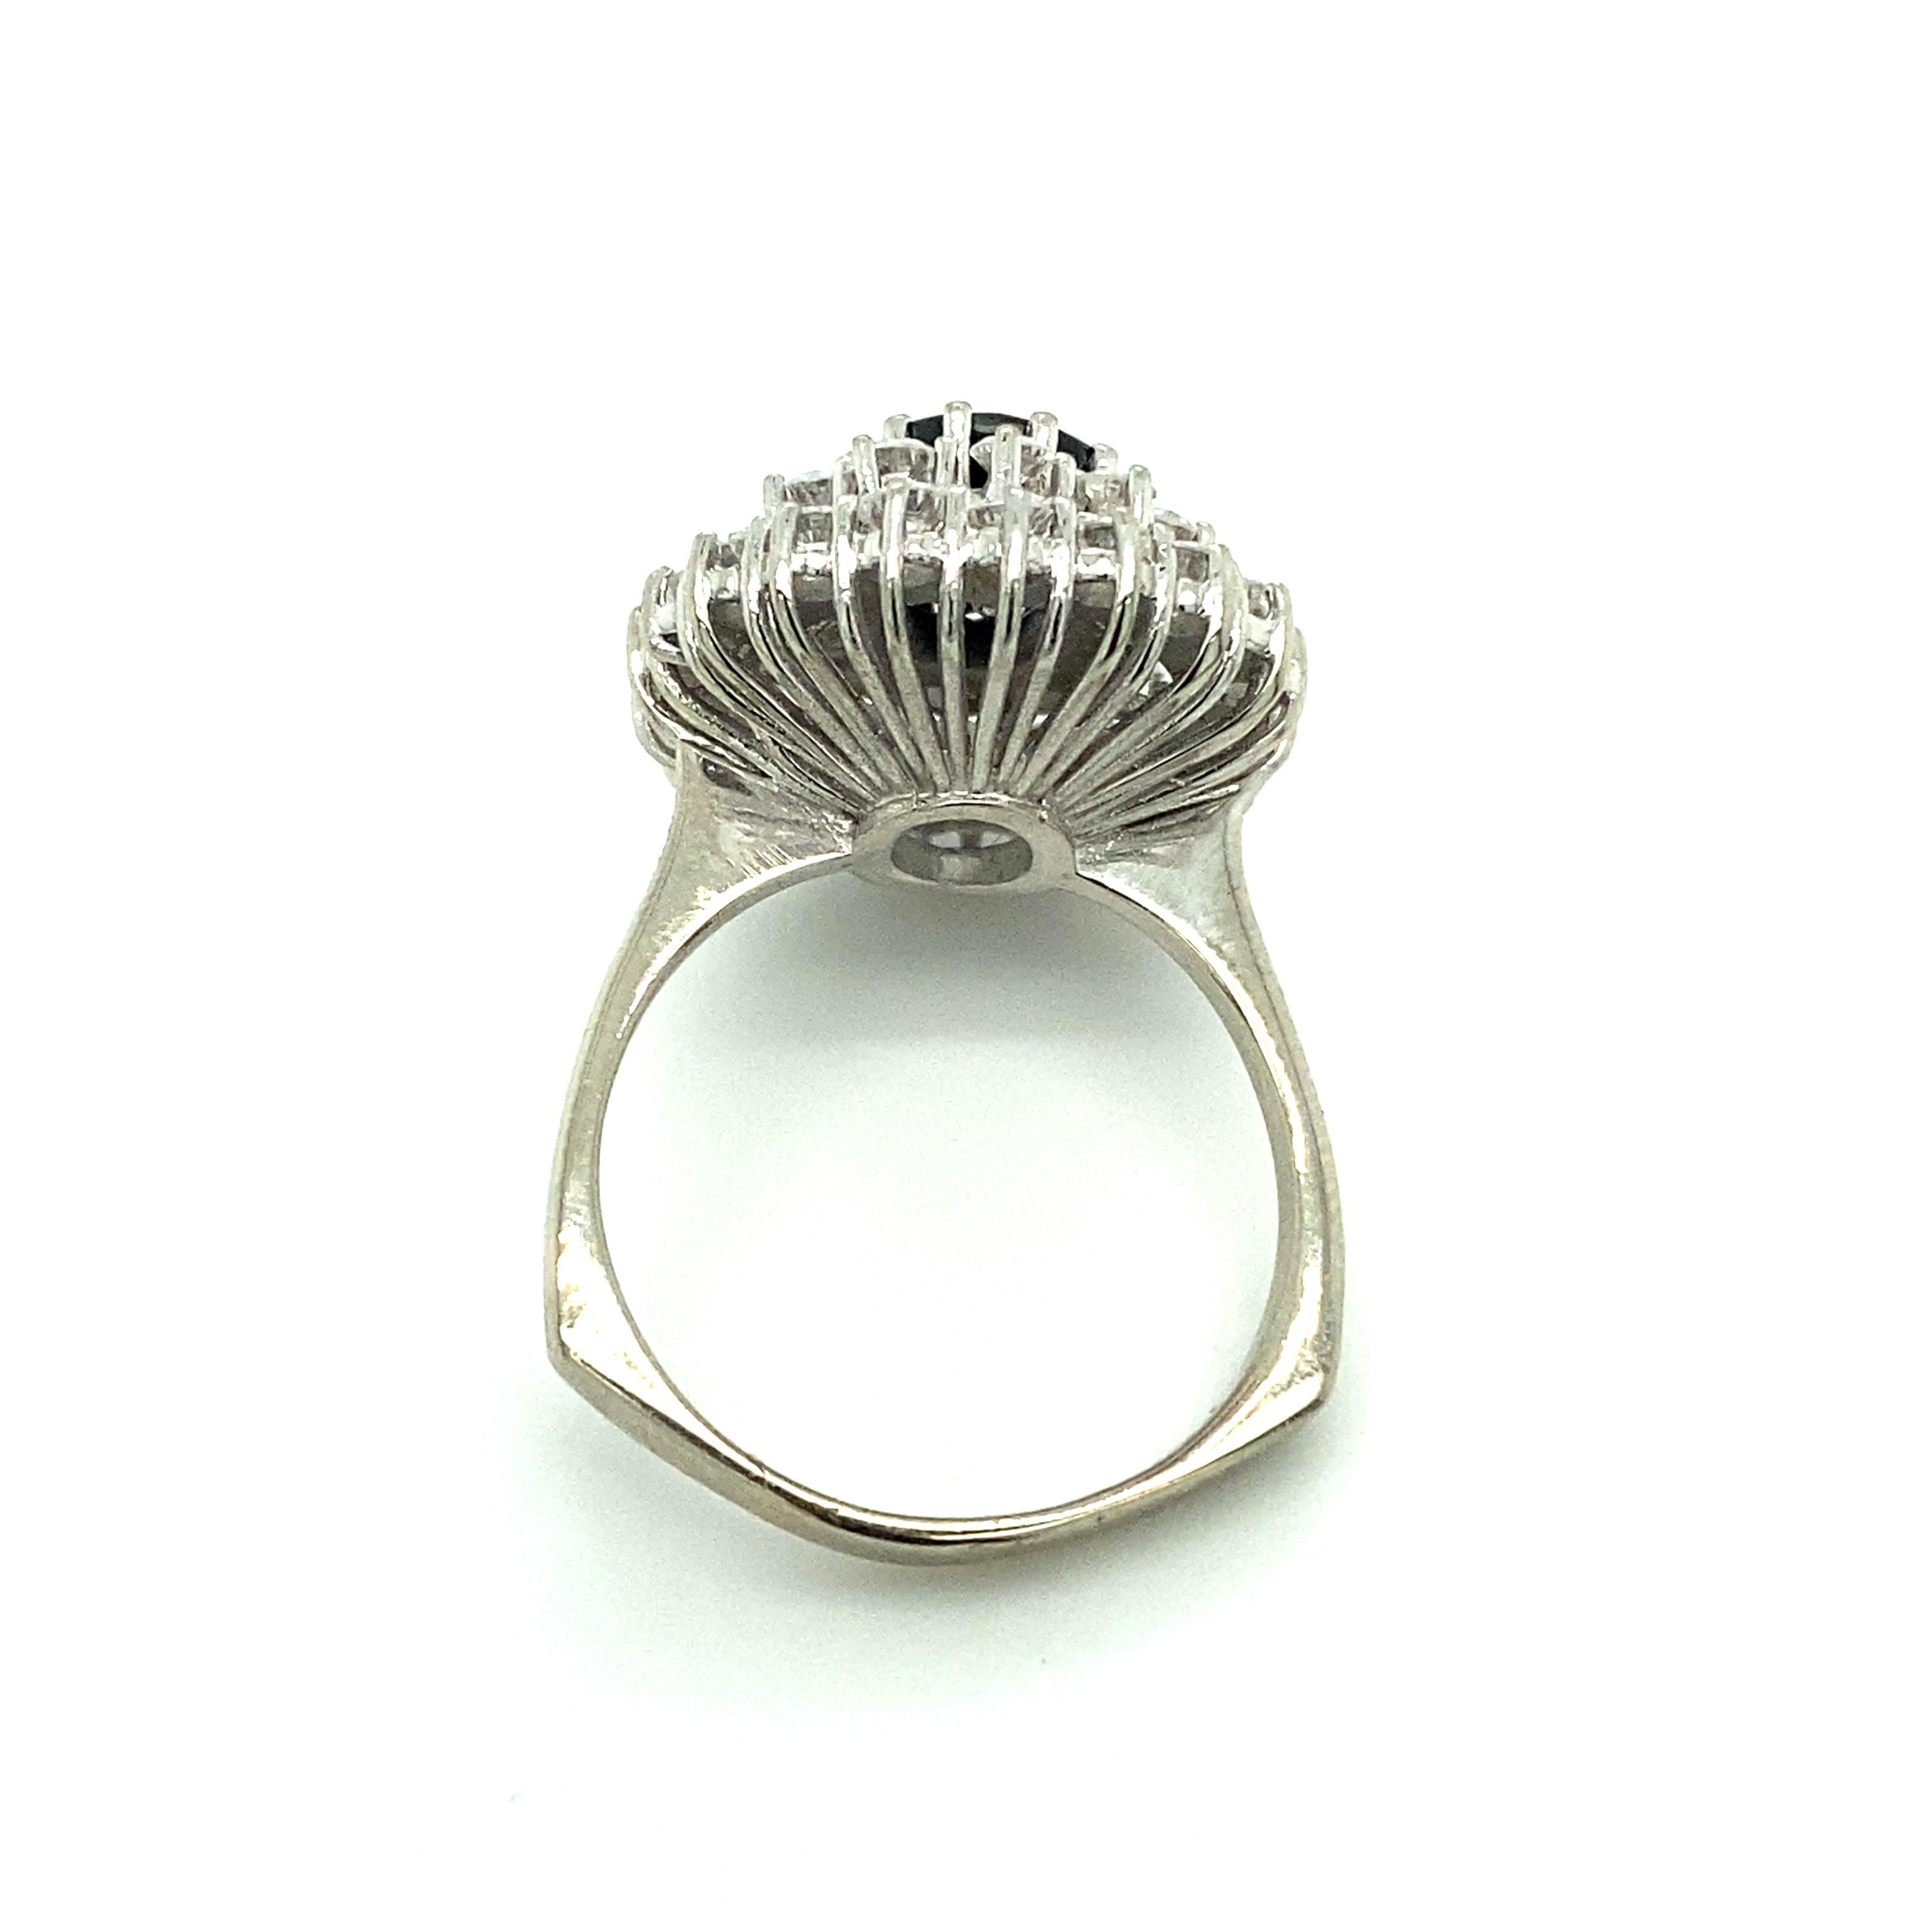 Sapphire & Diamonds Cocktail Ring In Excellent Condition For Sale In Miami, FL